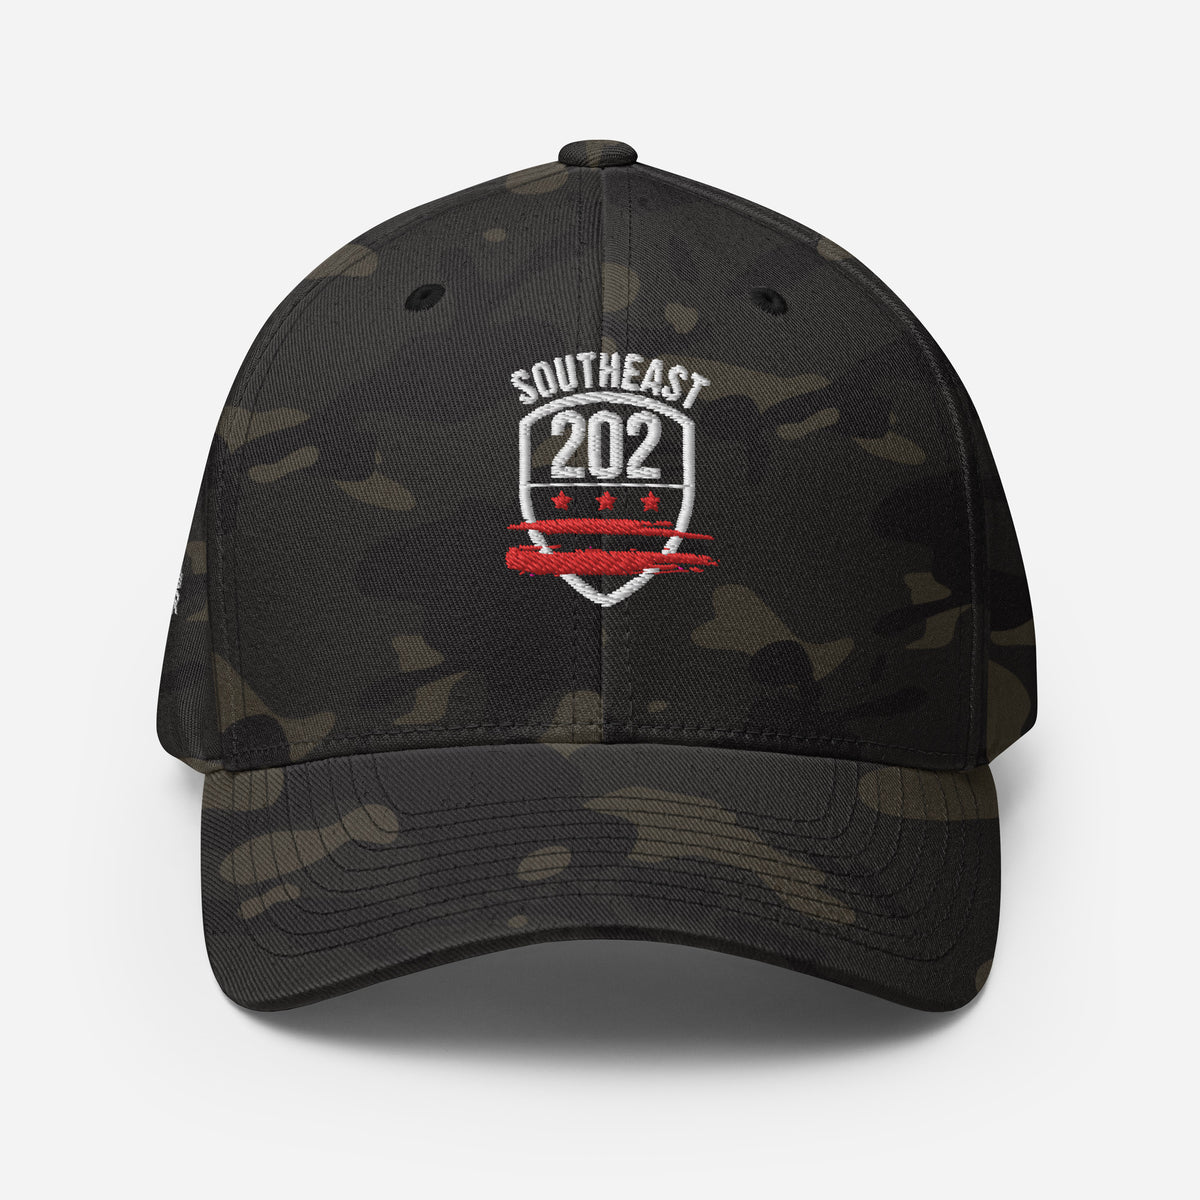 'SOUTHEAST / 202' Emblem & EOTR - Structured Twill Cap (MULTICAM)